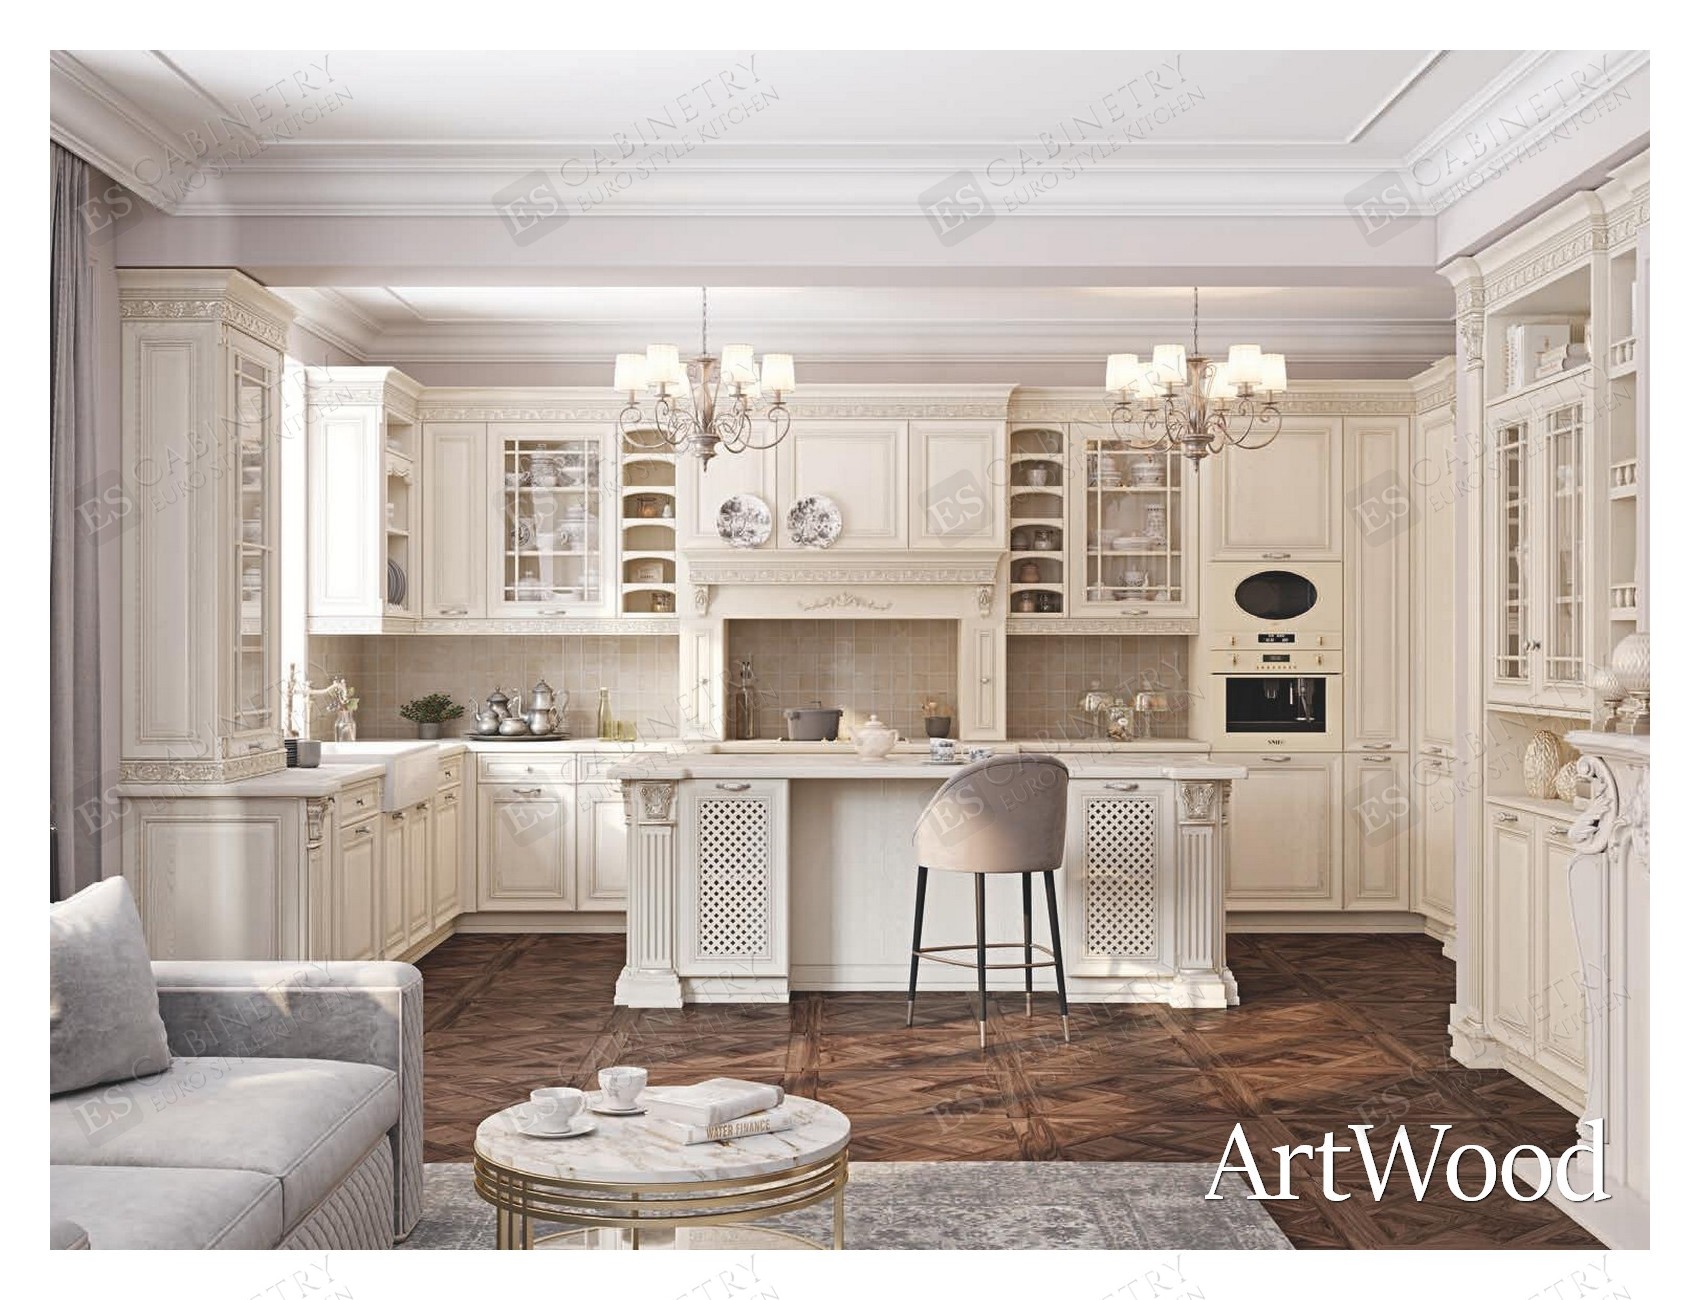 ArtWood | European kitchen design